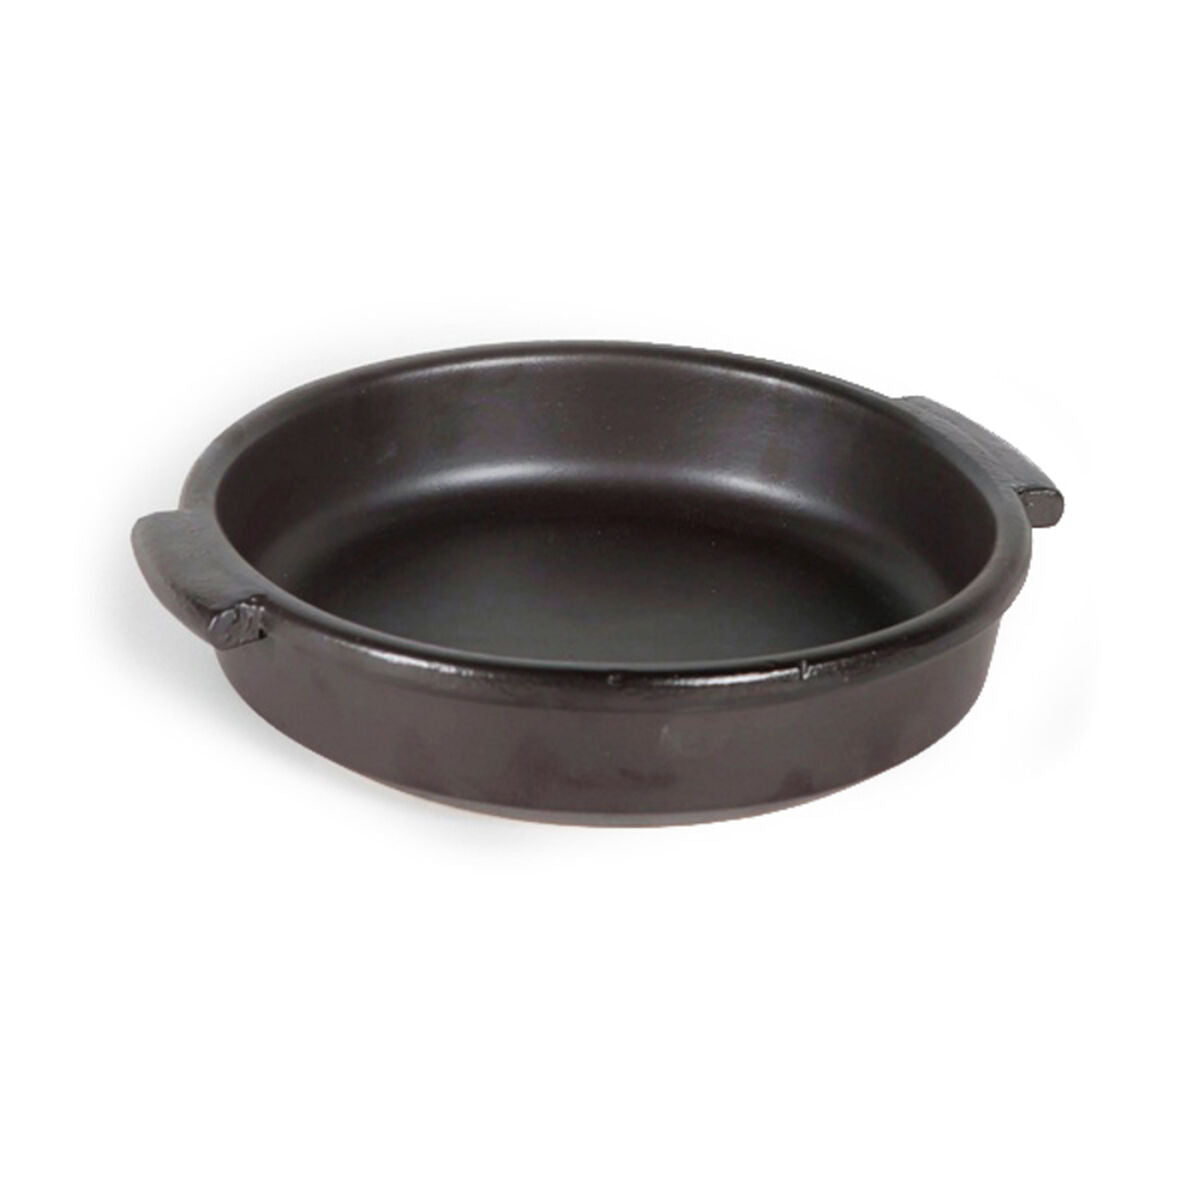 Kasserolle anaflor barro anaflor svart keramikk 17 cm